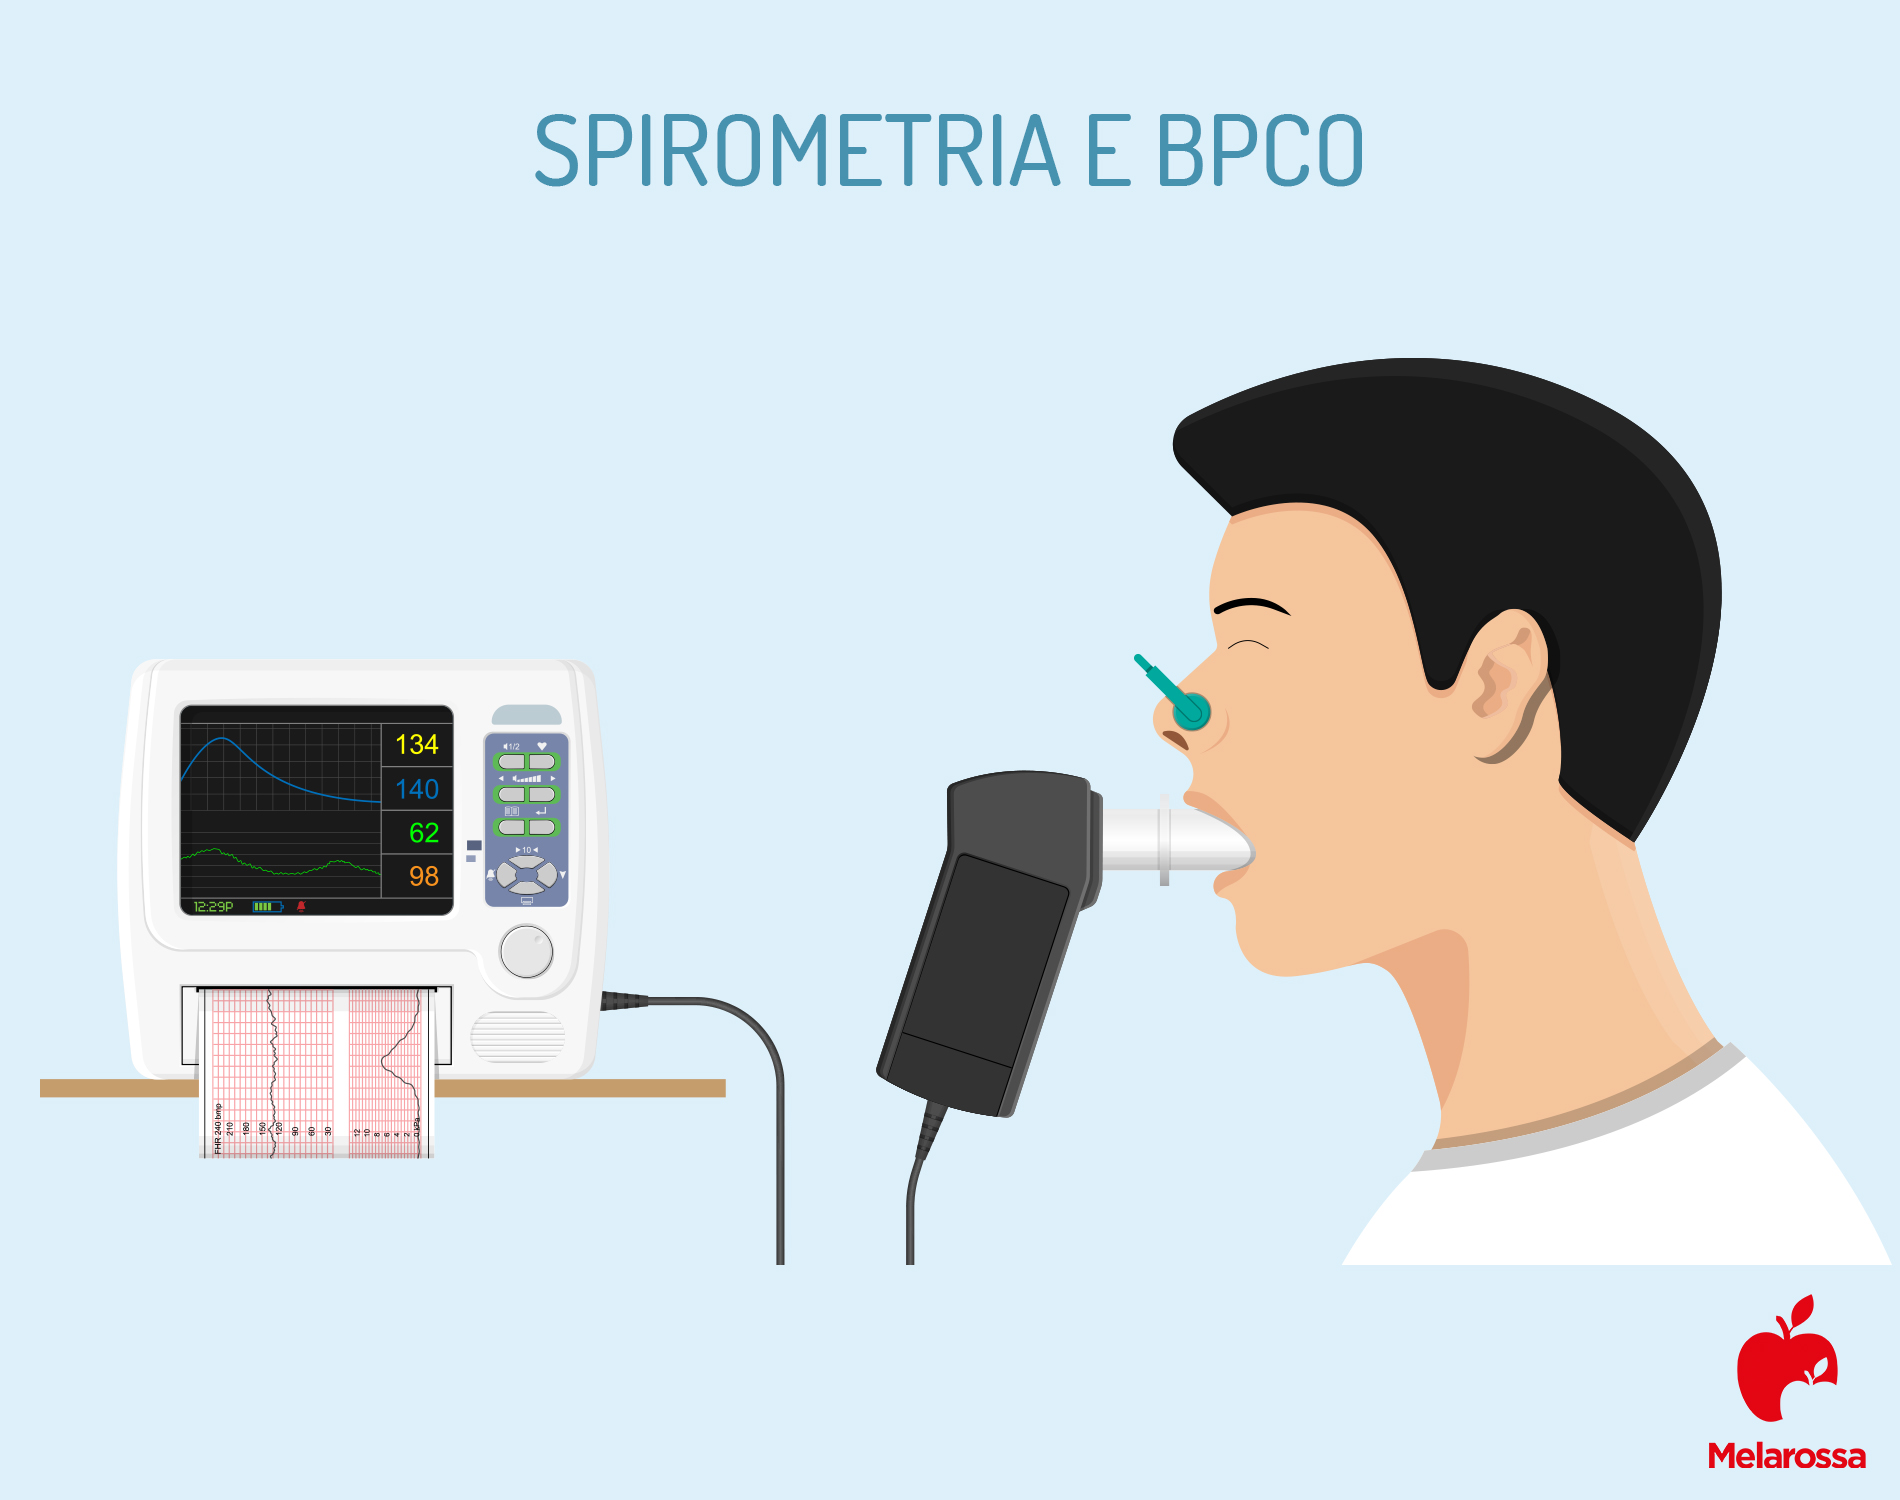 Broncopneumopatia cronica ostruttiva spirometria